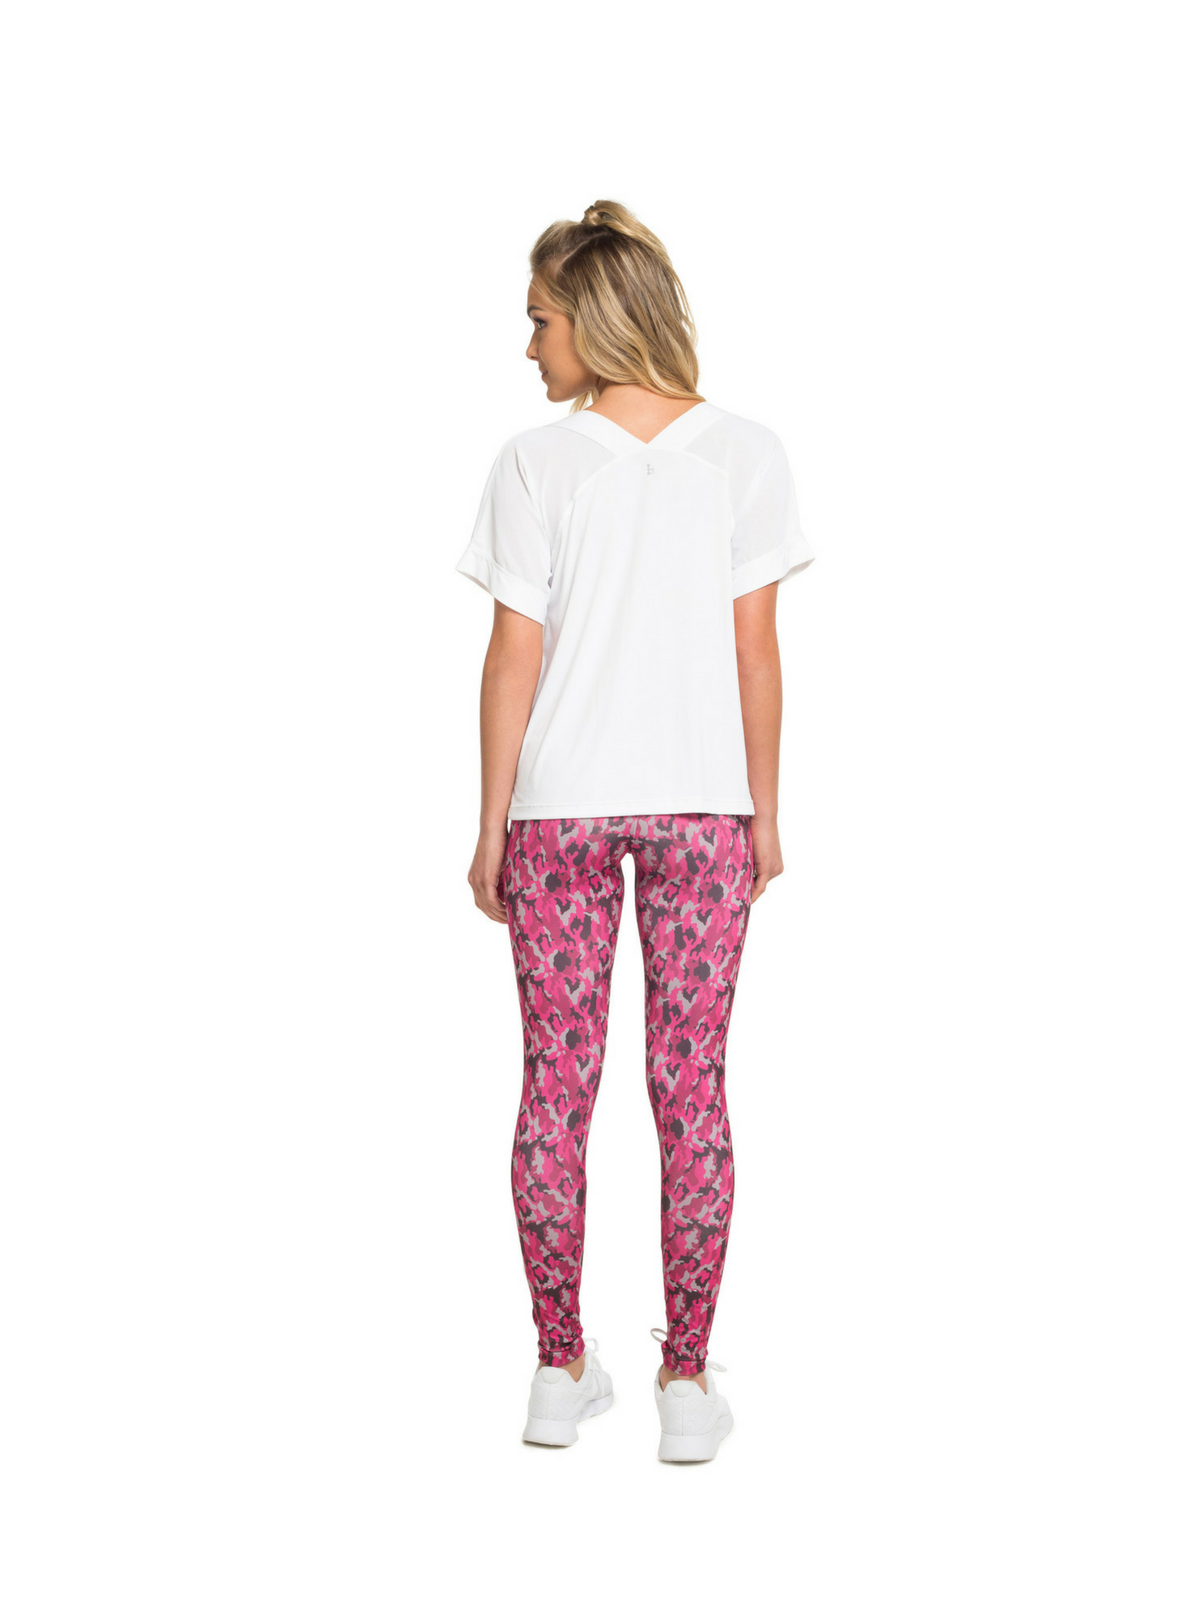 Pink camo patterned leggings